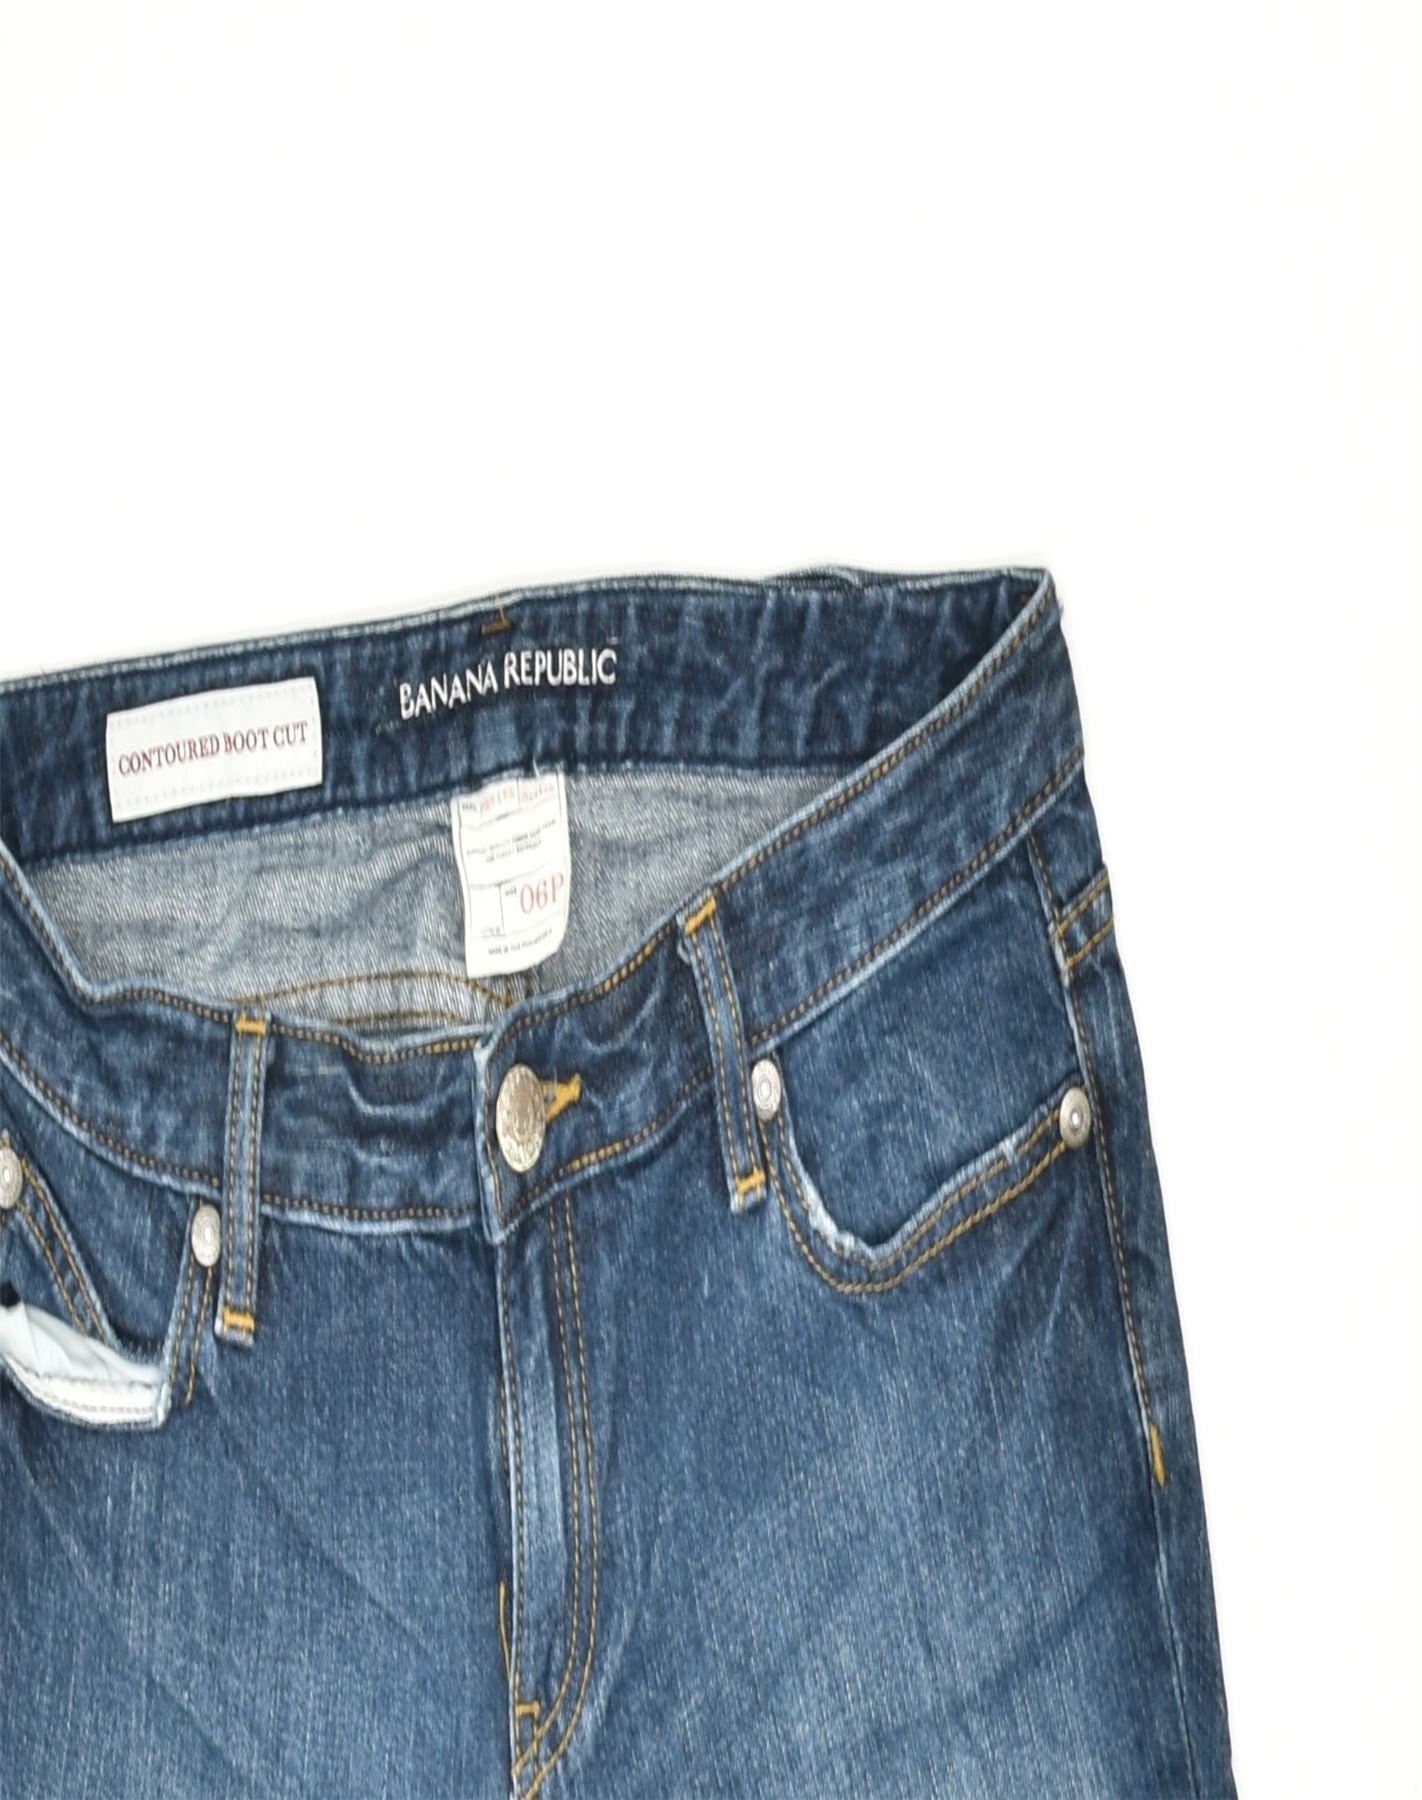 BANANA REPUBLIC Womens Petite Bootcut Jeans US 6 Medium W33 L31 Blue, Vintage & Second-Hand Clothing Online